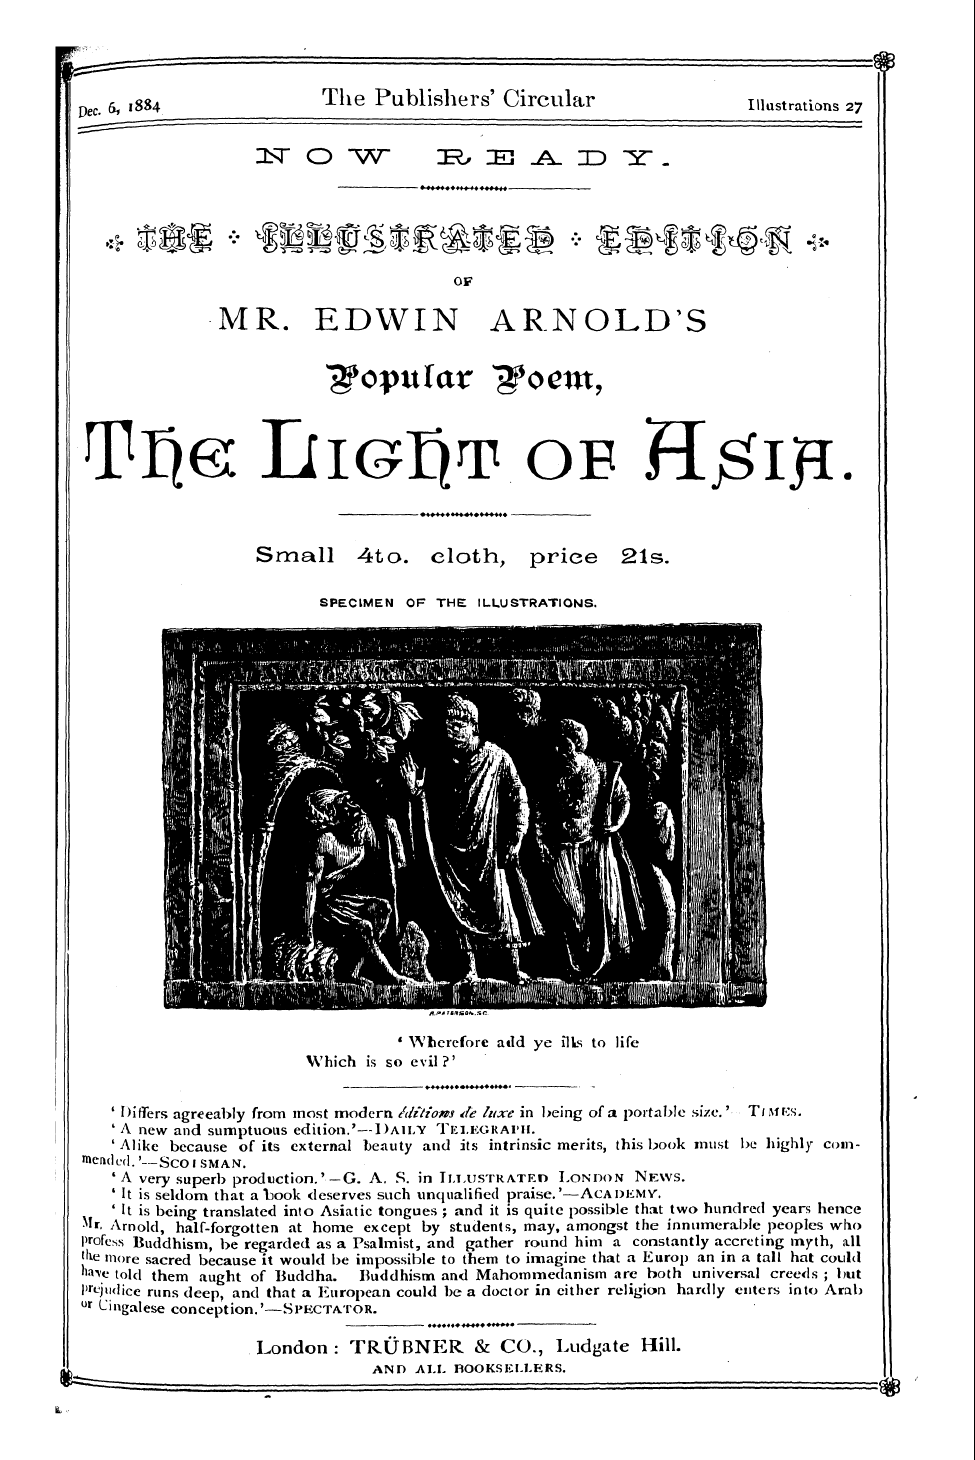 Publishers’ Circular (1880-1890): jS F Y, 1st edition - Ad10901